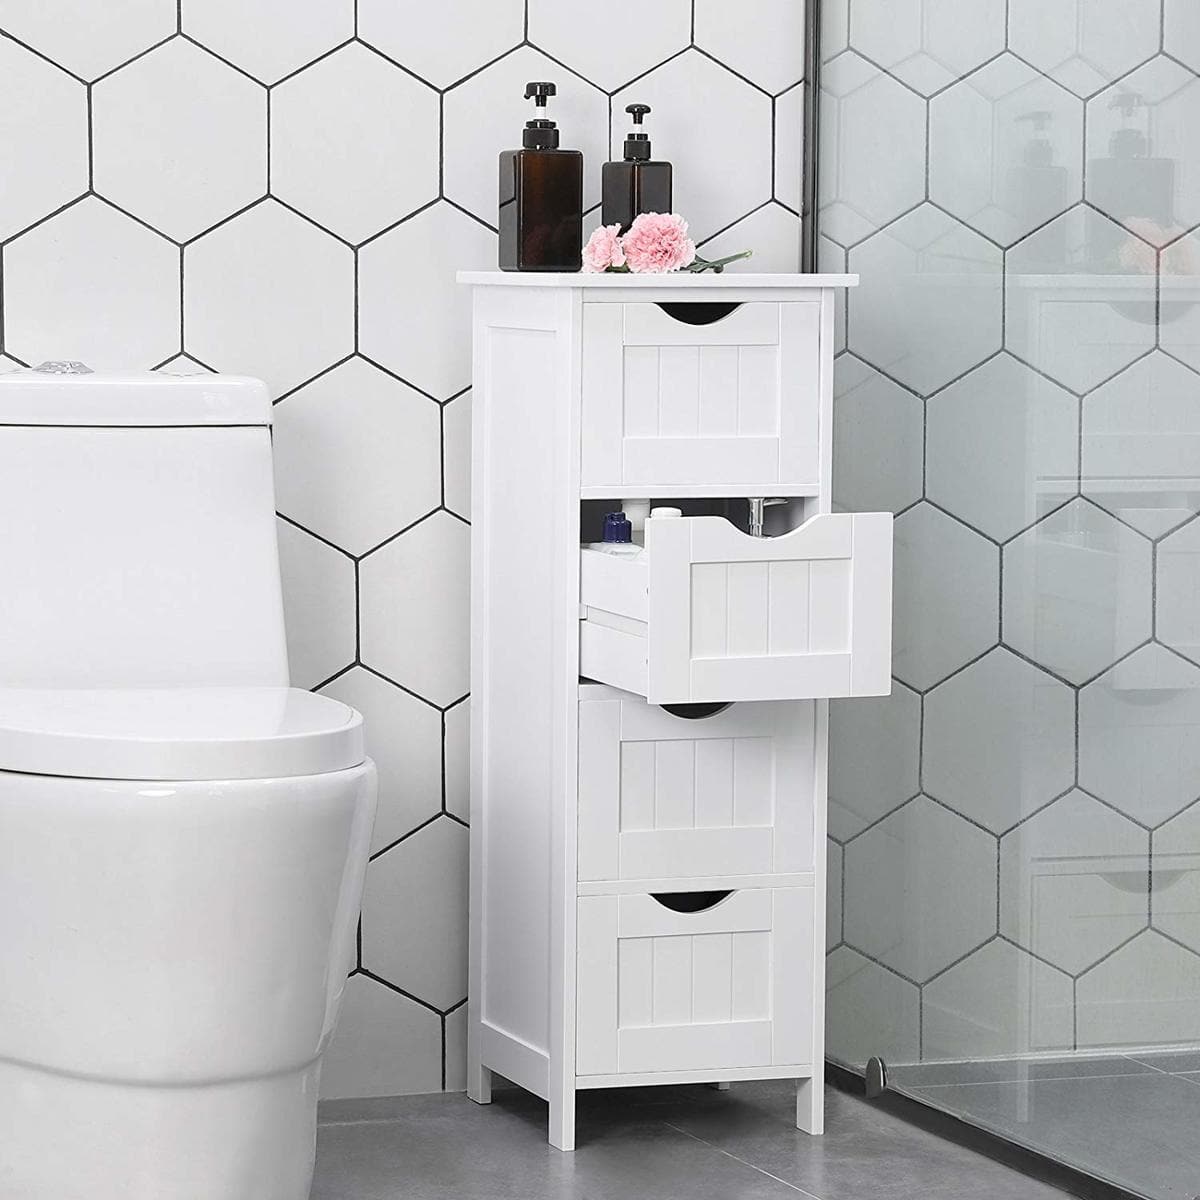 Nancy's Bathroom Furniture - Narrow Cabinet - Freestanding Bathroom Furniture - Bathroom Cabinet - Chest of Drawers - White